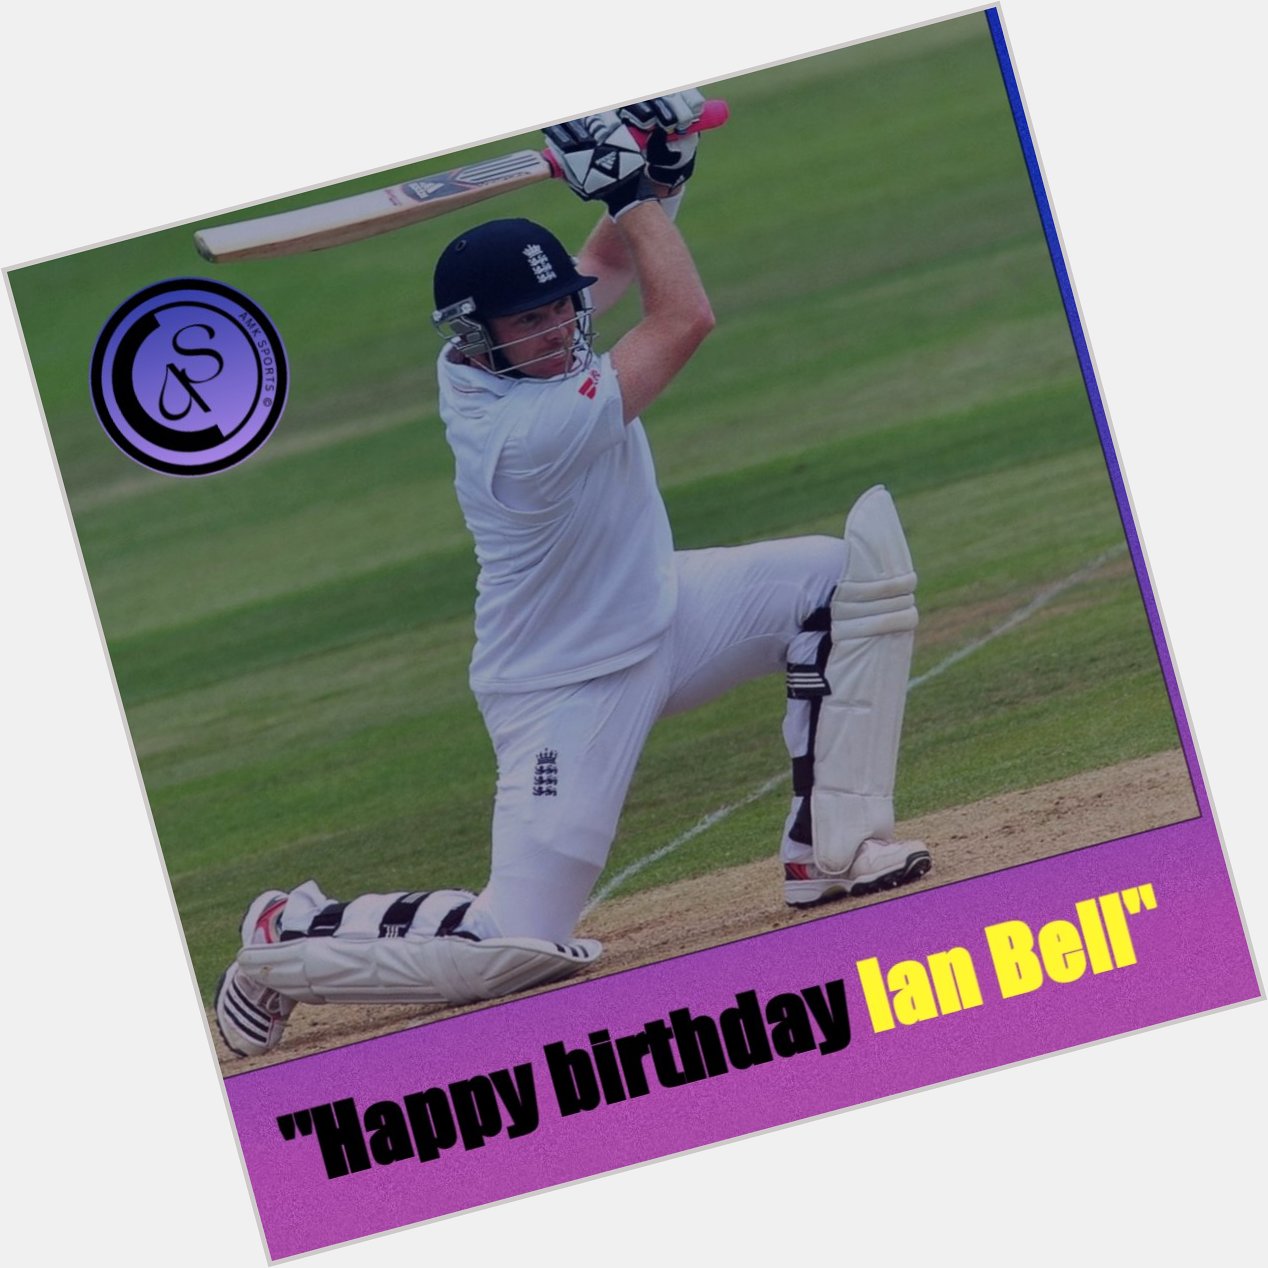 Happy birthday Ian Bell 